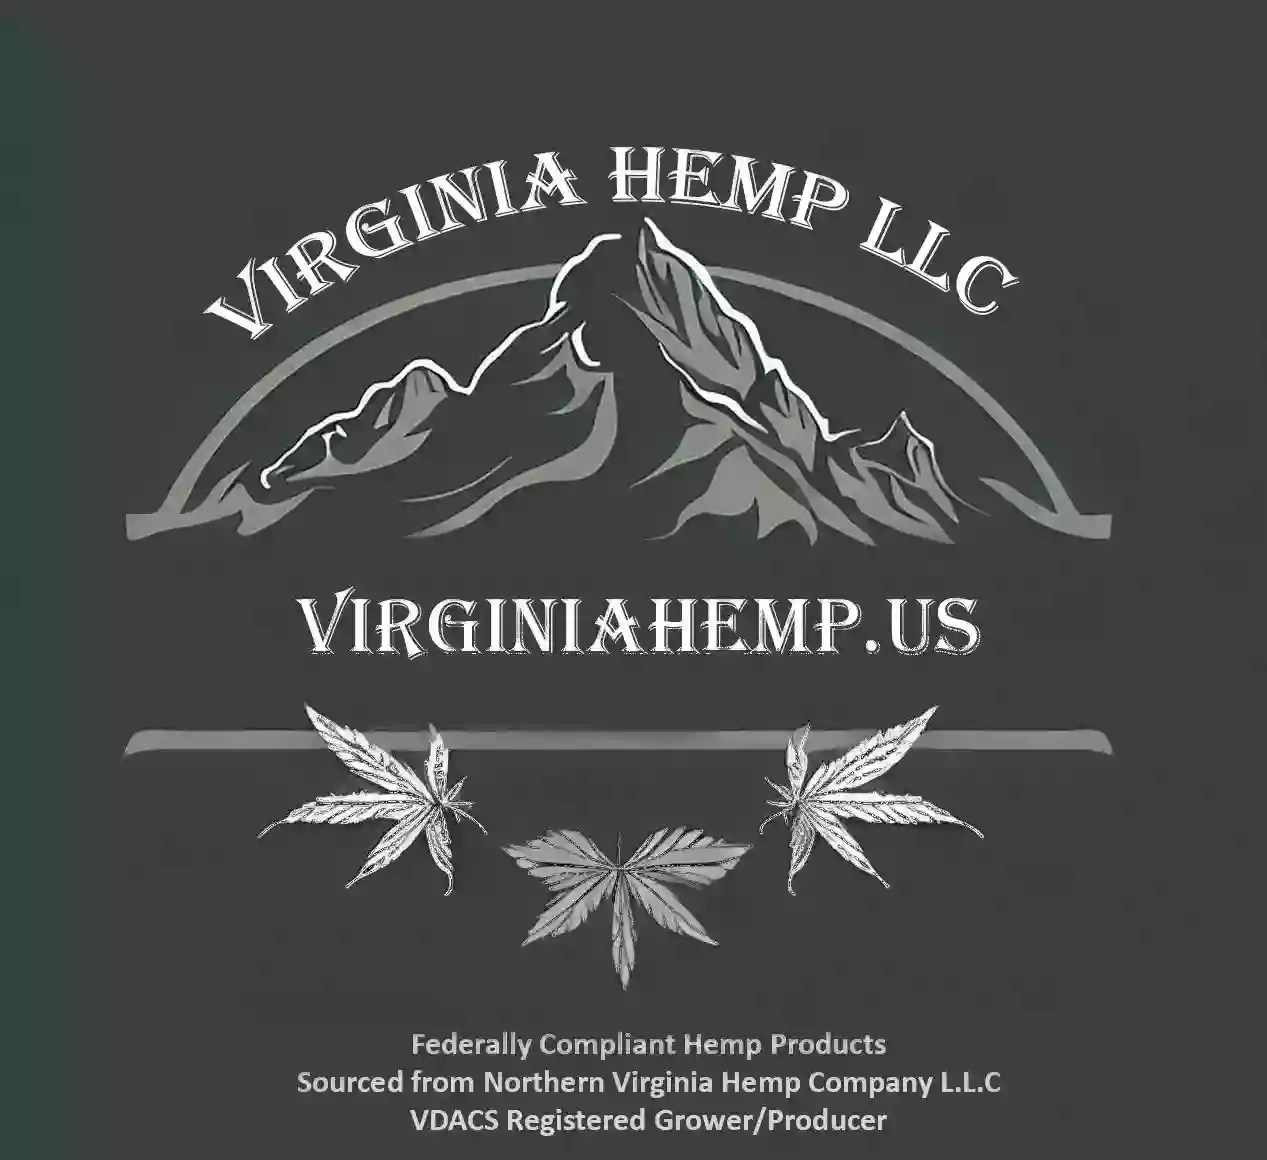 Northern Virginia Hemp Company L.L.C - “Virginia Hemp”